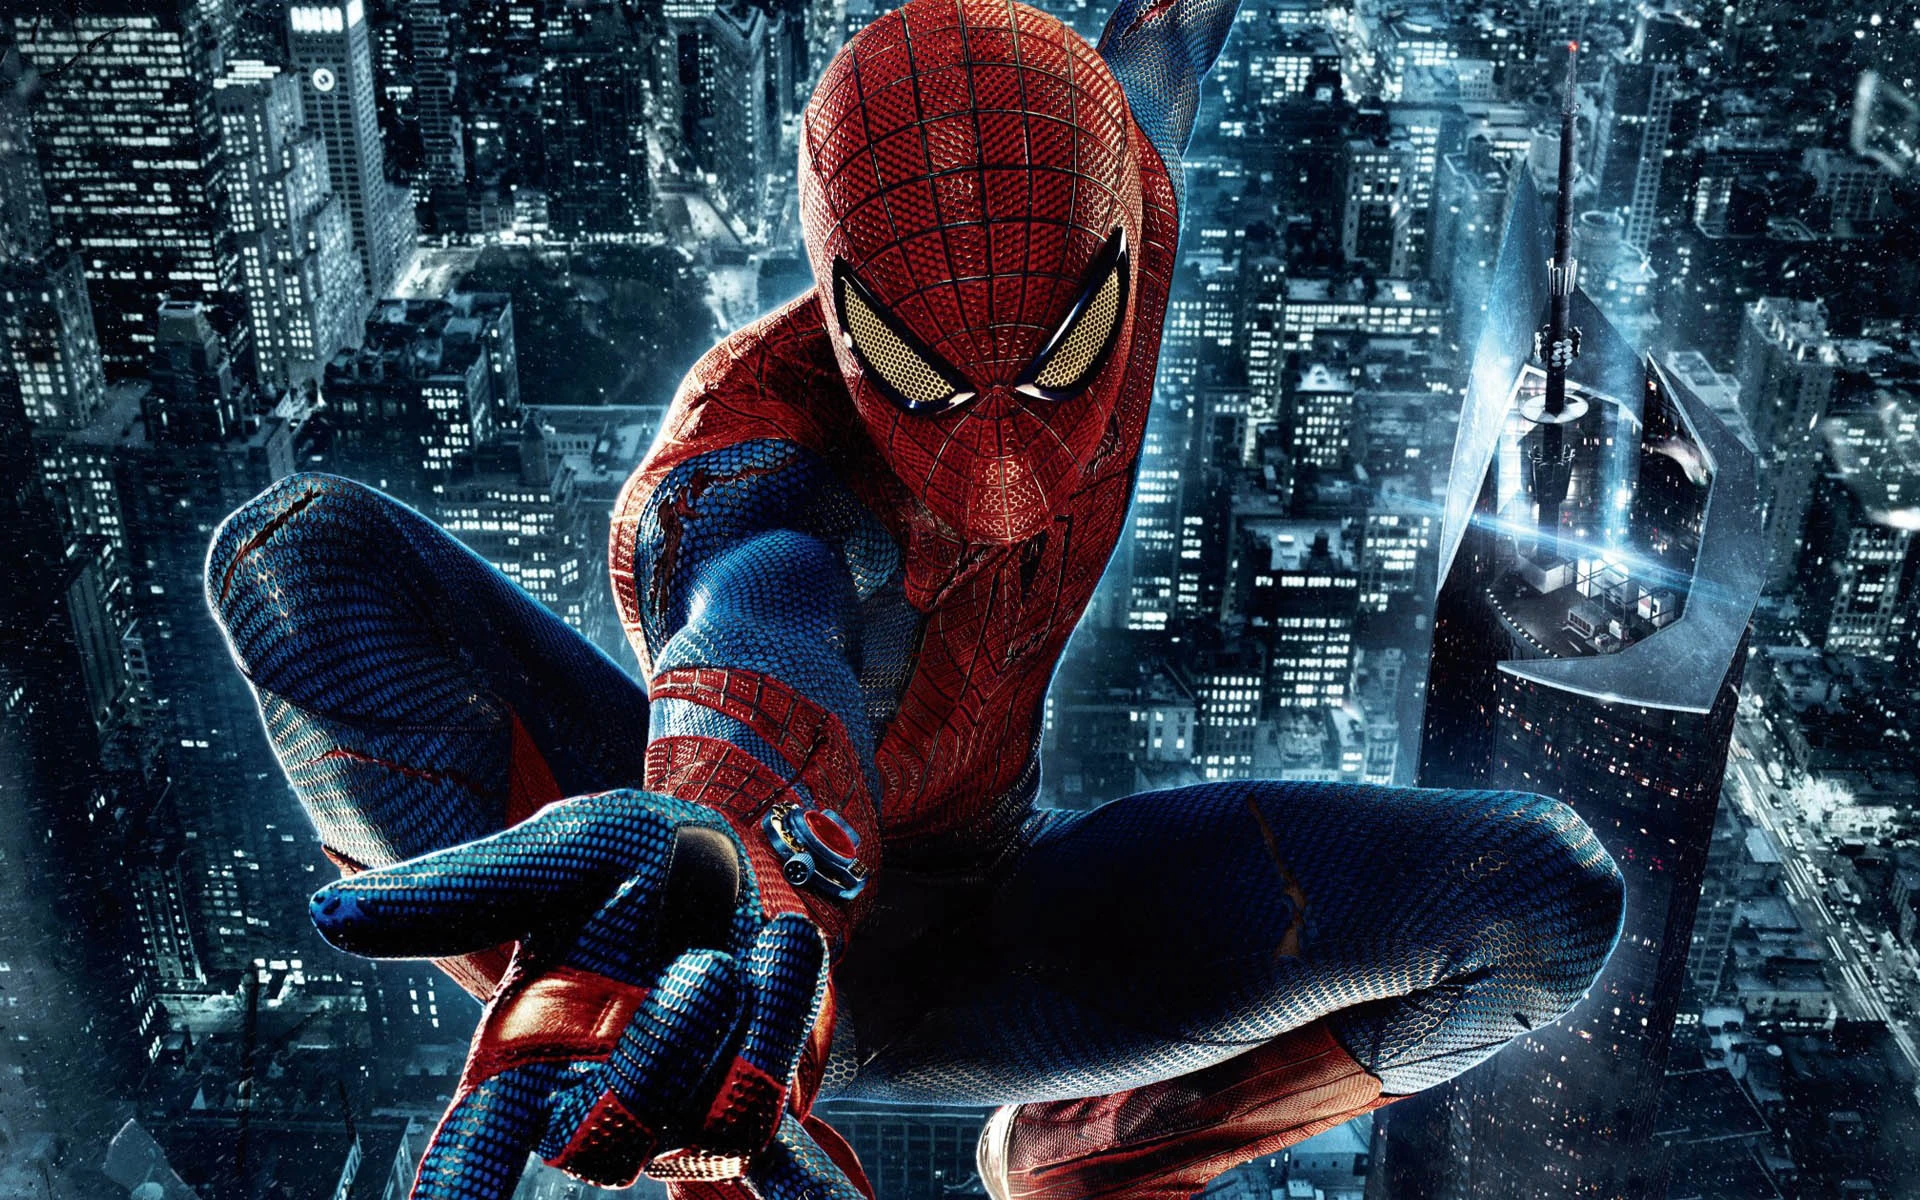 spider man | ชวนคุยยามเช้า | [ชวนคุยยามเช้า] ครบรอบ 13 ปีของหนังชุด Spider Man ตอนที่ 1: มาย้อนรำลึกถึงหนังที่ใครๆก็รู้จักเรื่องนี้กัน